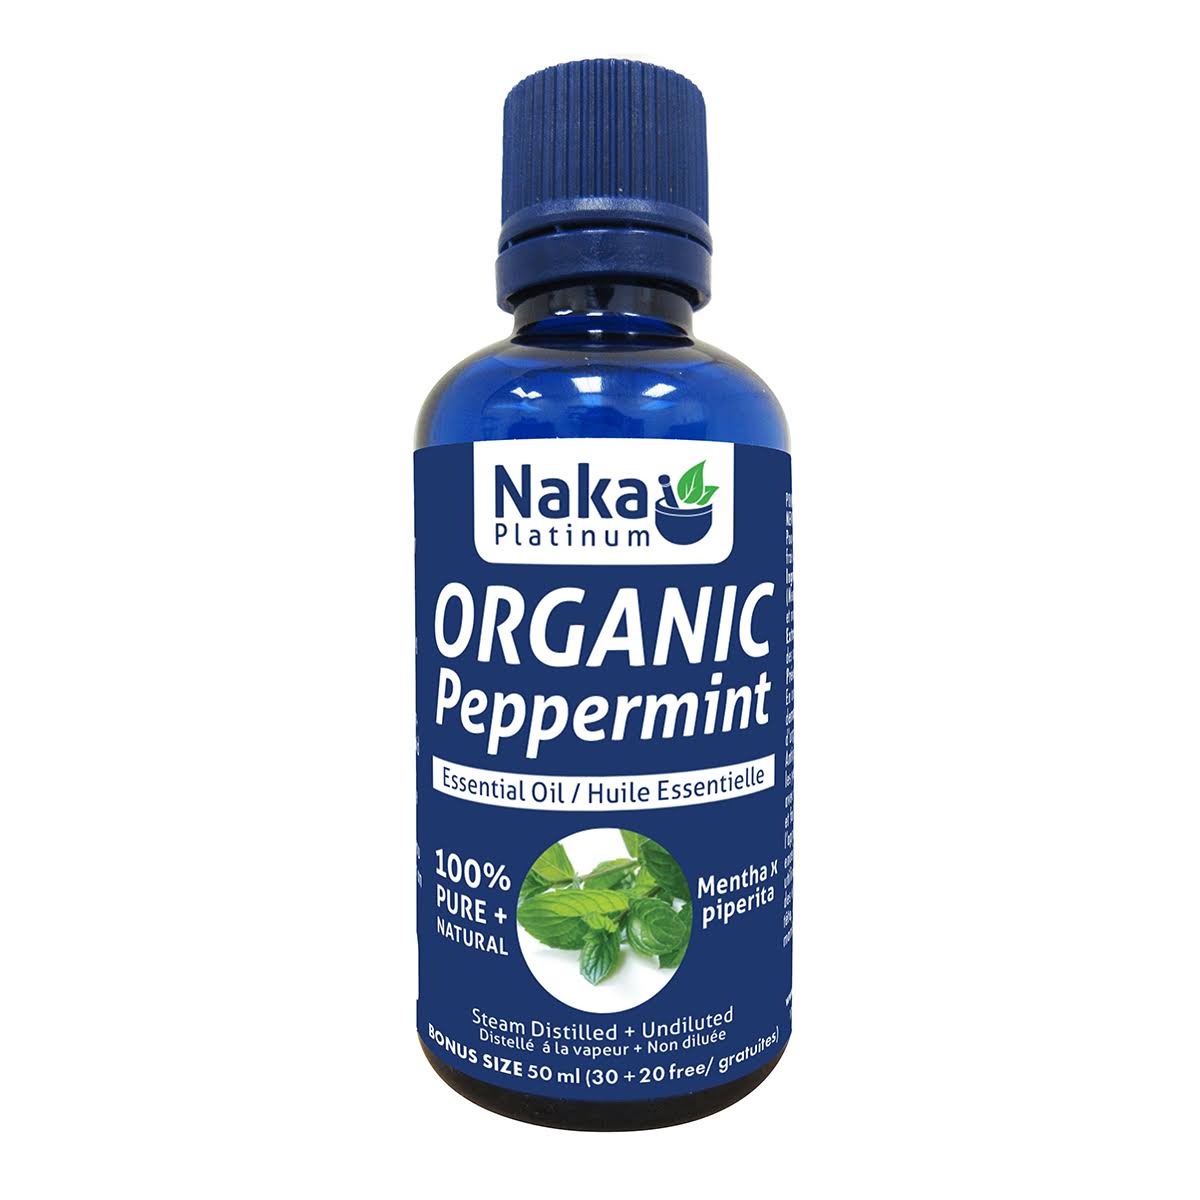 Naka Platinum Organic Peppermint Essential Oil, 50ml